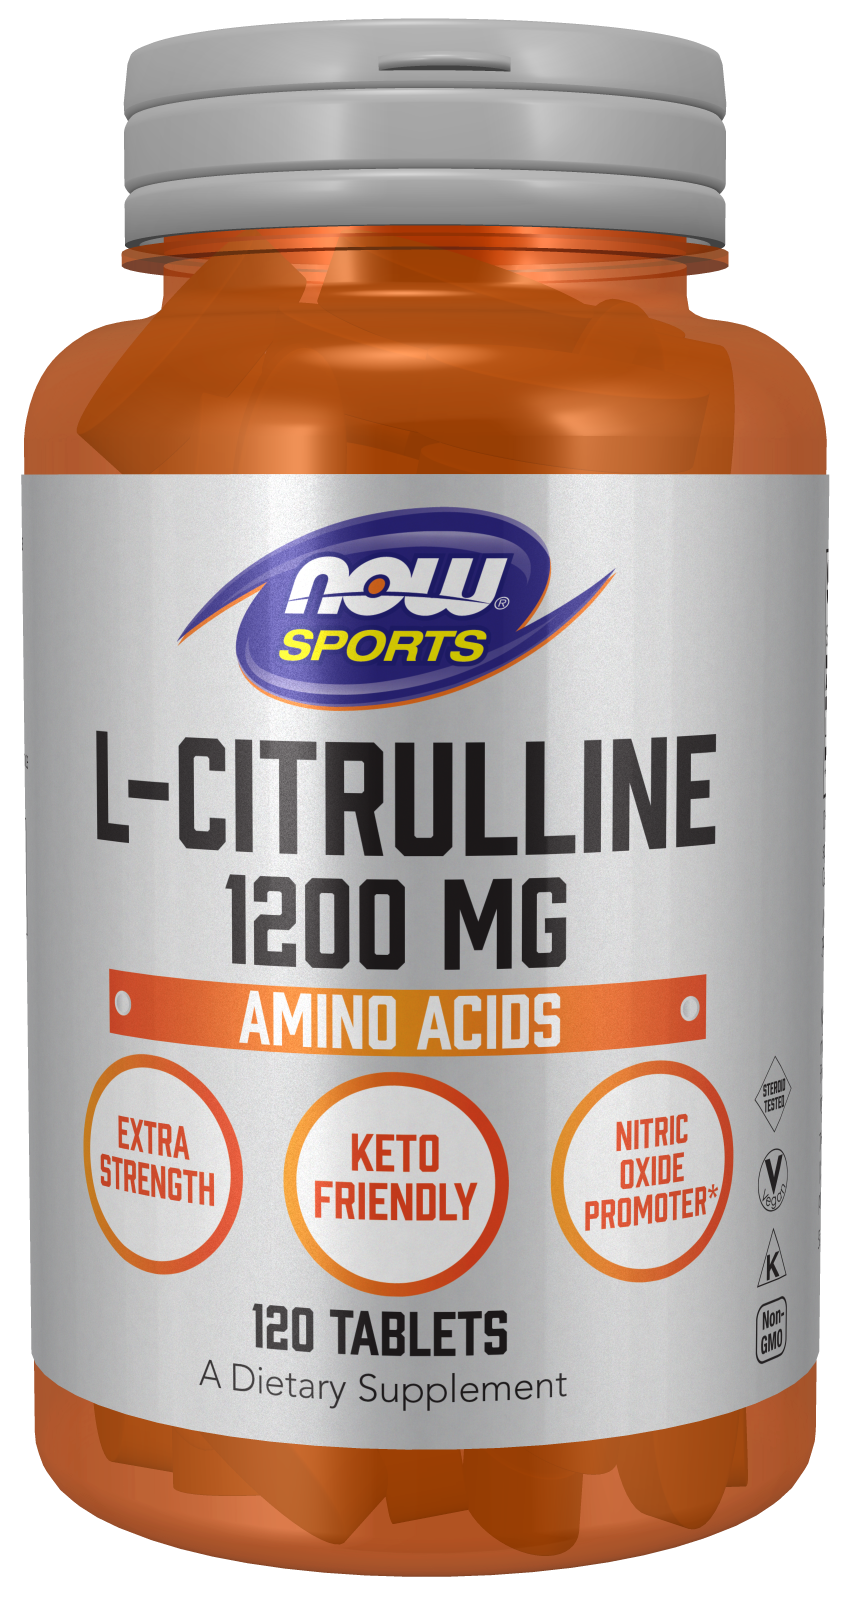 L-Citrulline, Extra Strength 1200 mg - 120 Tablets Bottle Front